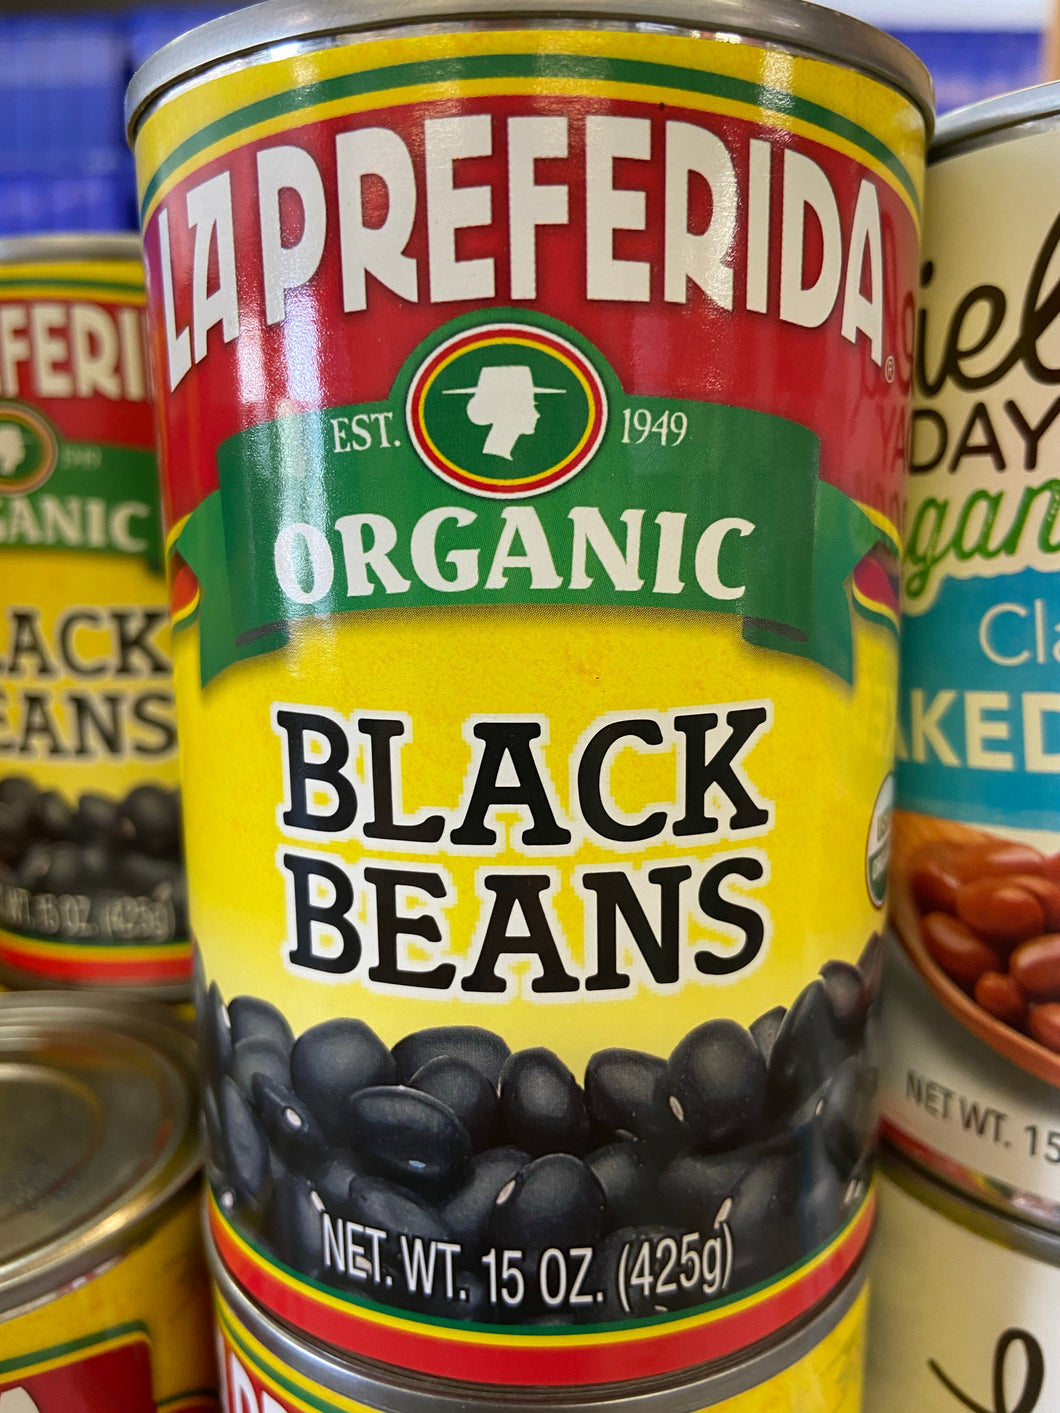 Beans Canned, Black, La Preferida Organic